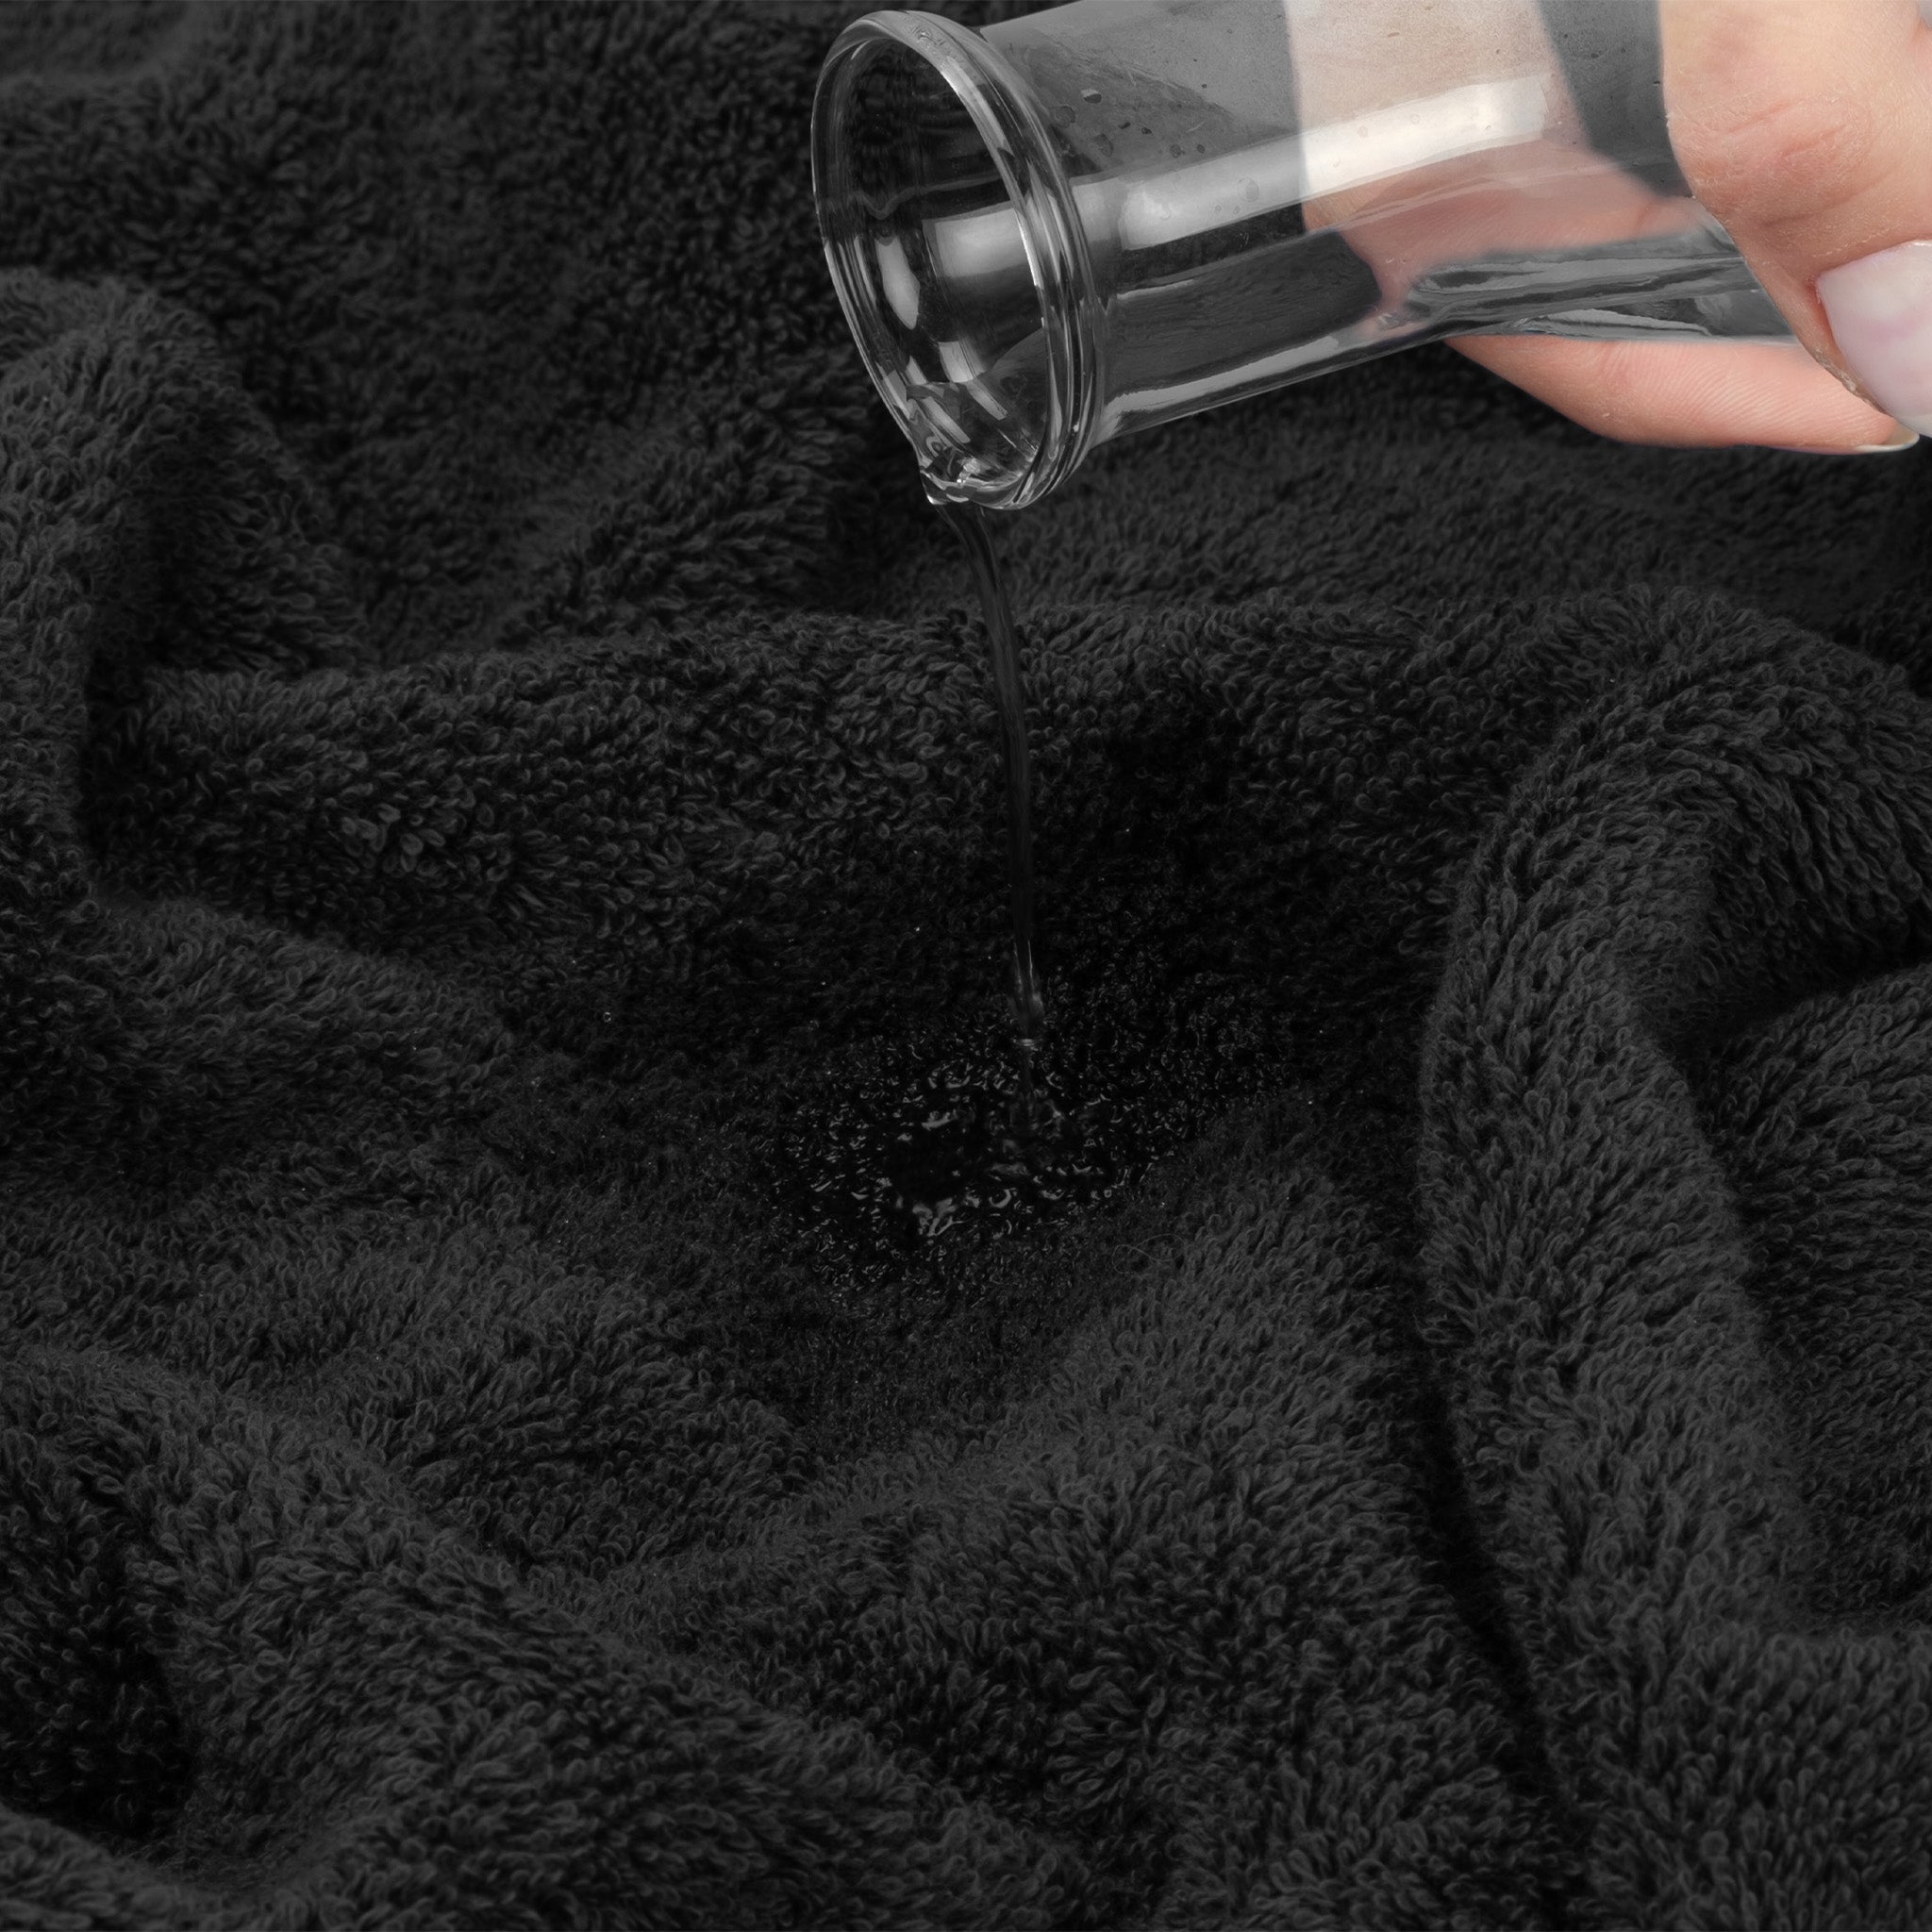 American Soft Linen 100% Ring Spun Cotton 40x80 Inches Oversized Bath Sheets black-5